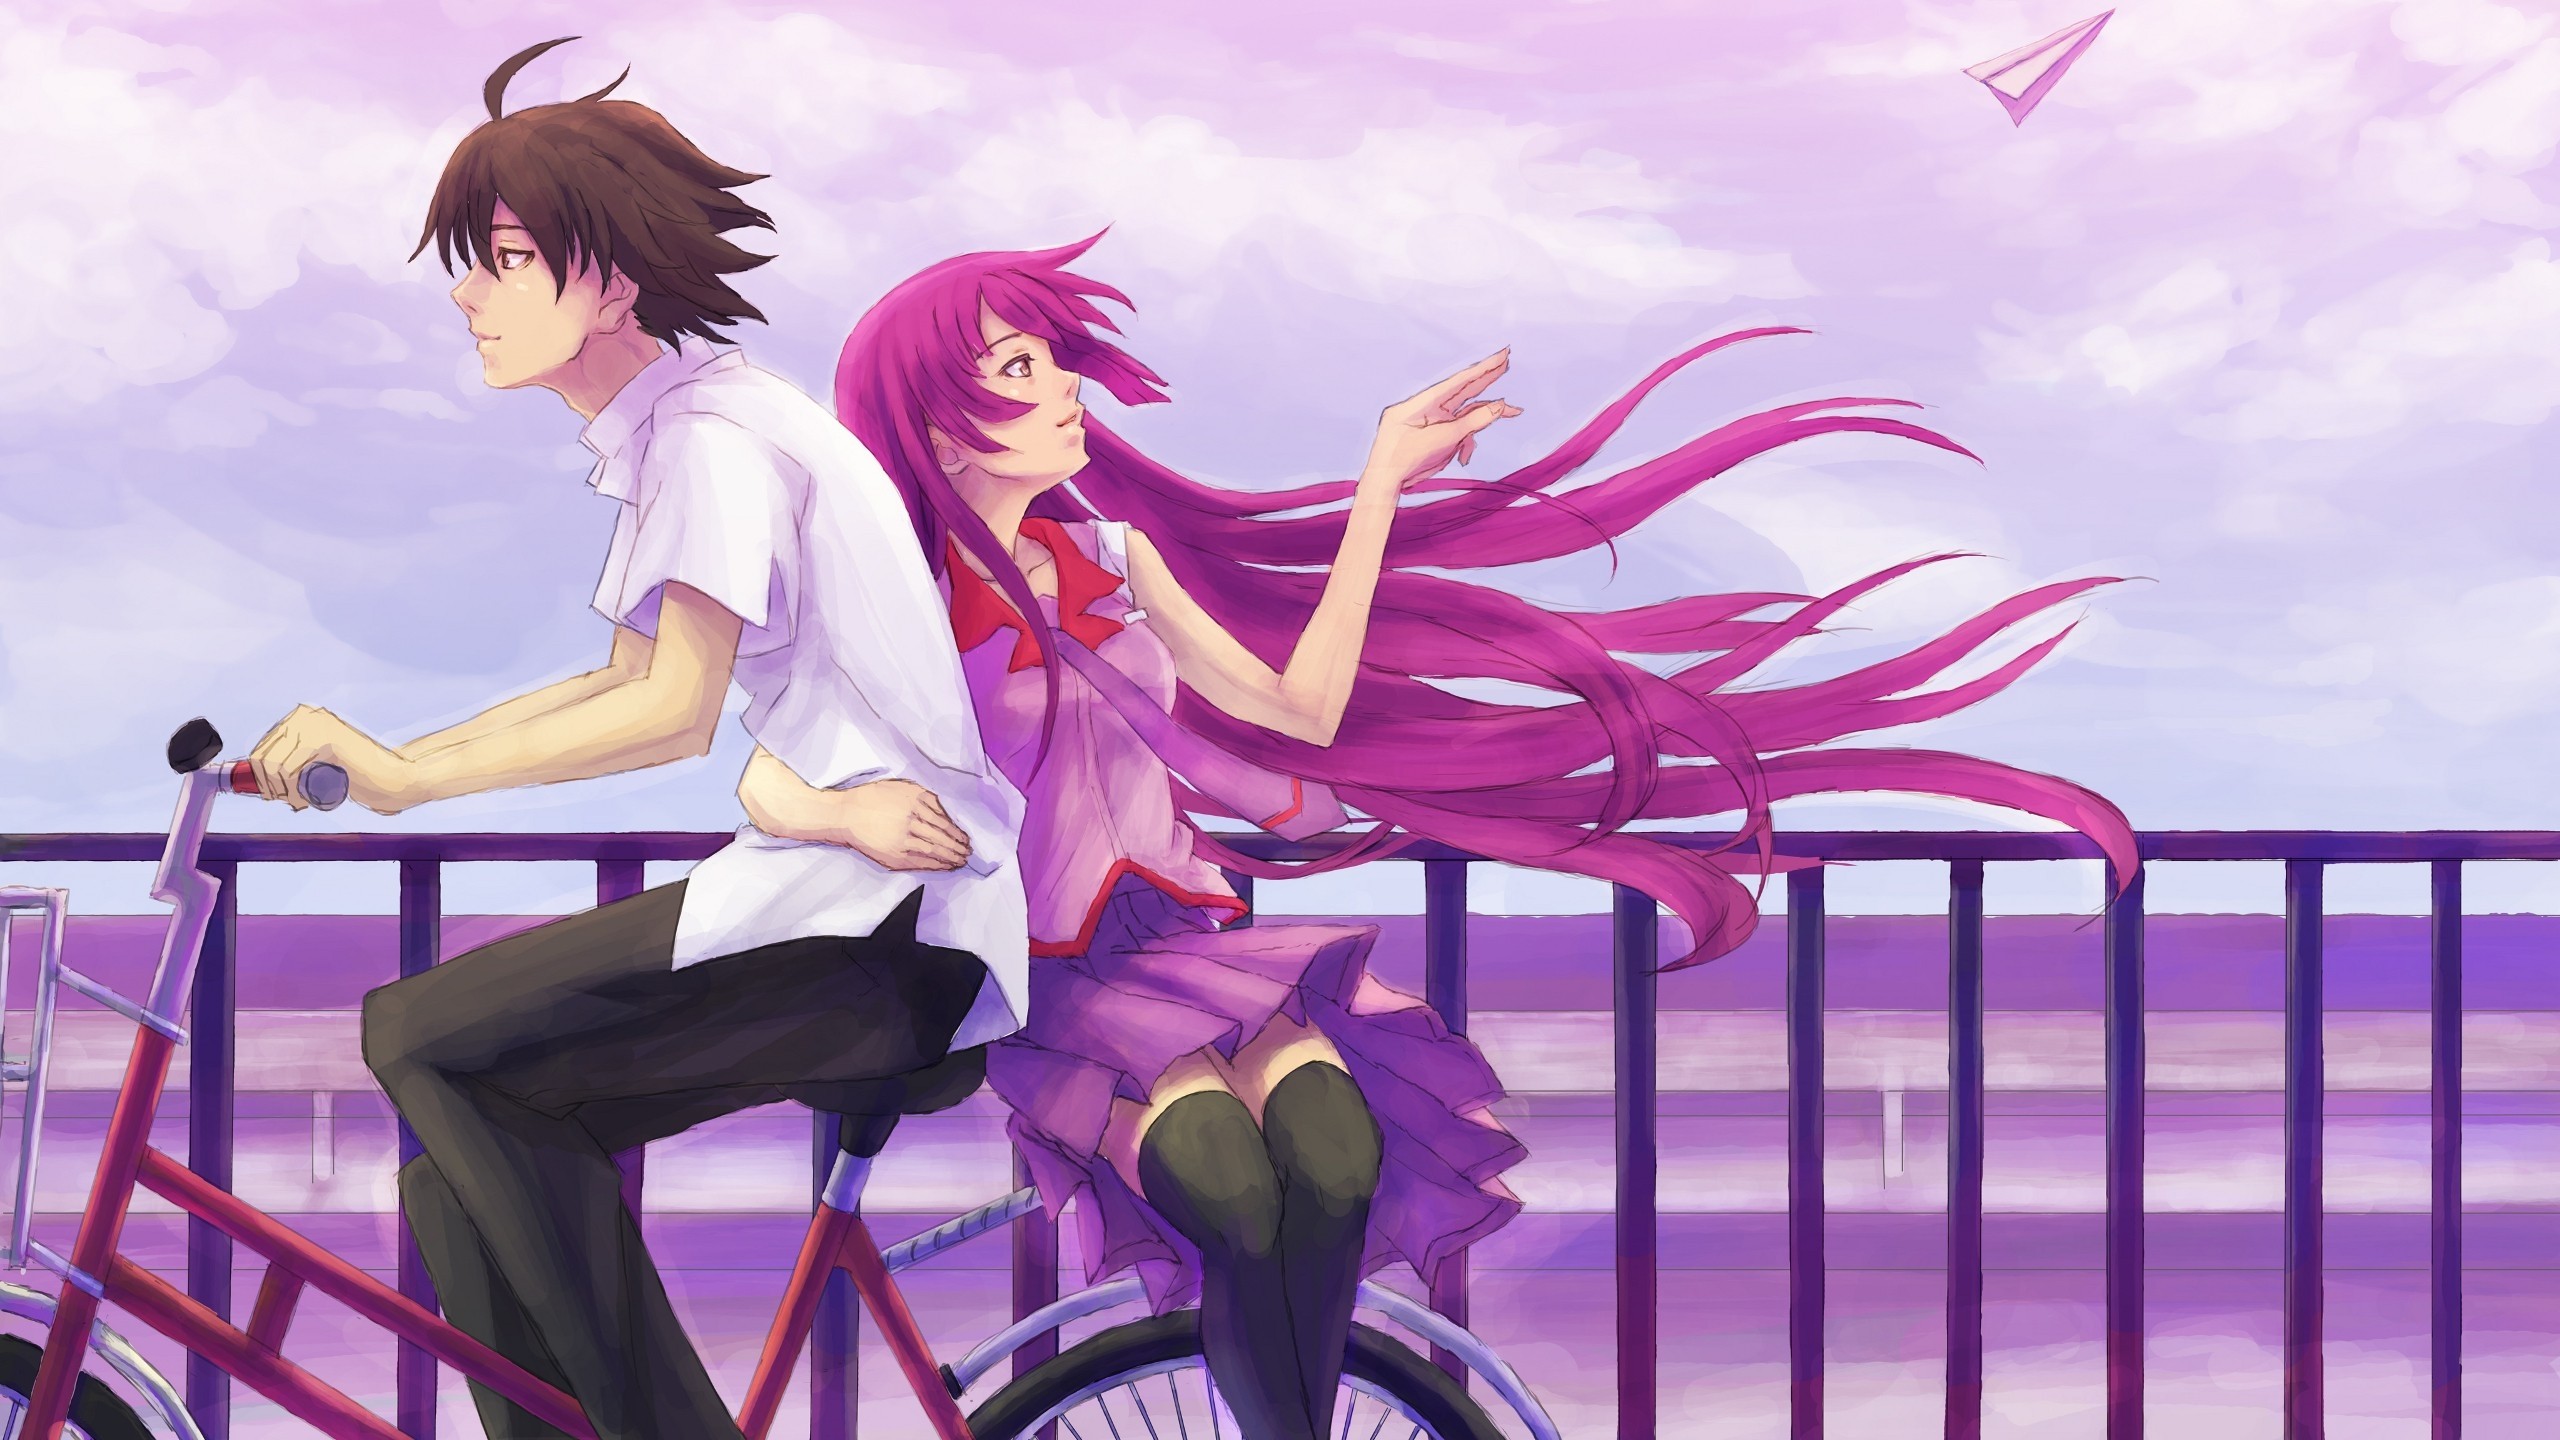 Wallpaper Boy, Girl, Walk, Bike, Motion Data Src - Anime Girl And Boy On  Bike - 2560x1440 Wallpaper 